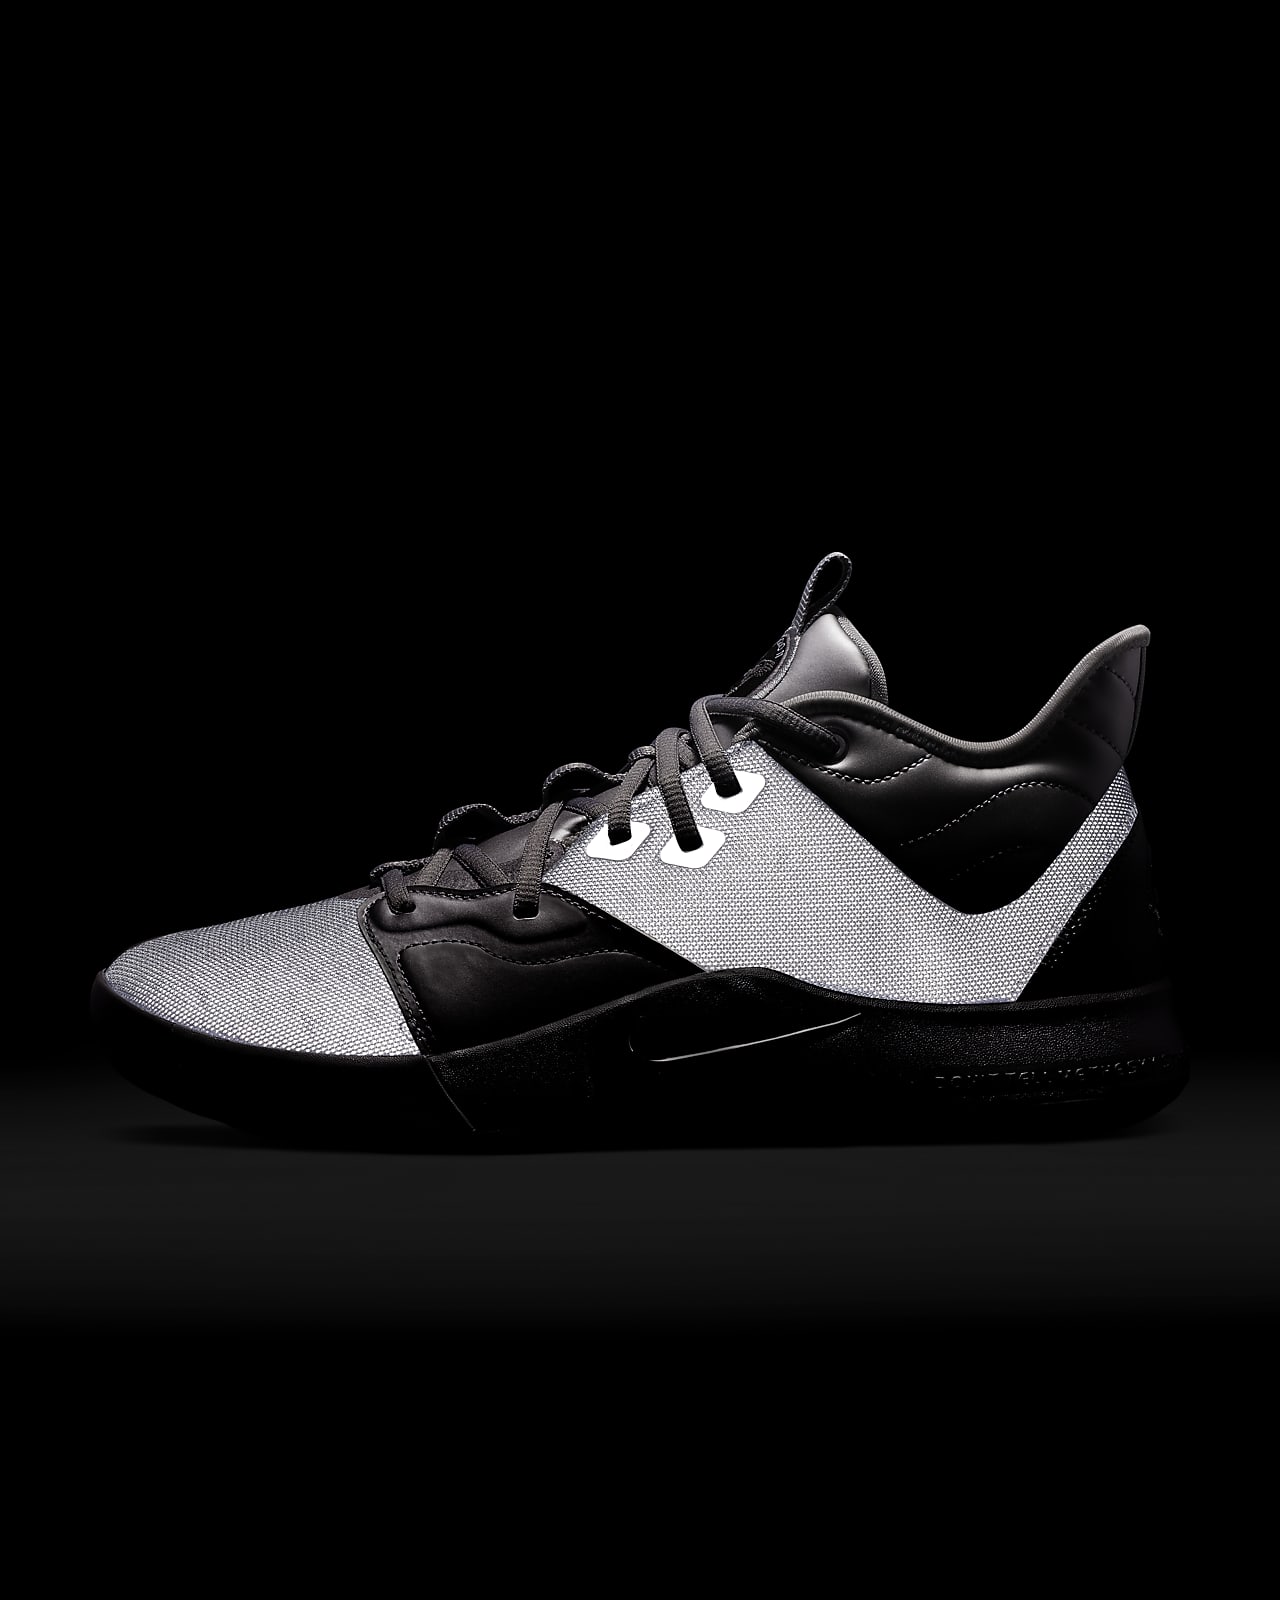 Pg 3 Nasa Basketball Shoe. Nike Ph